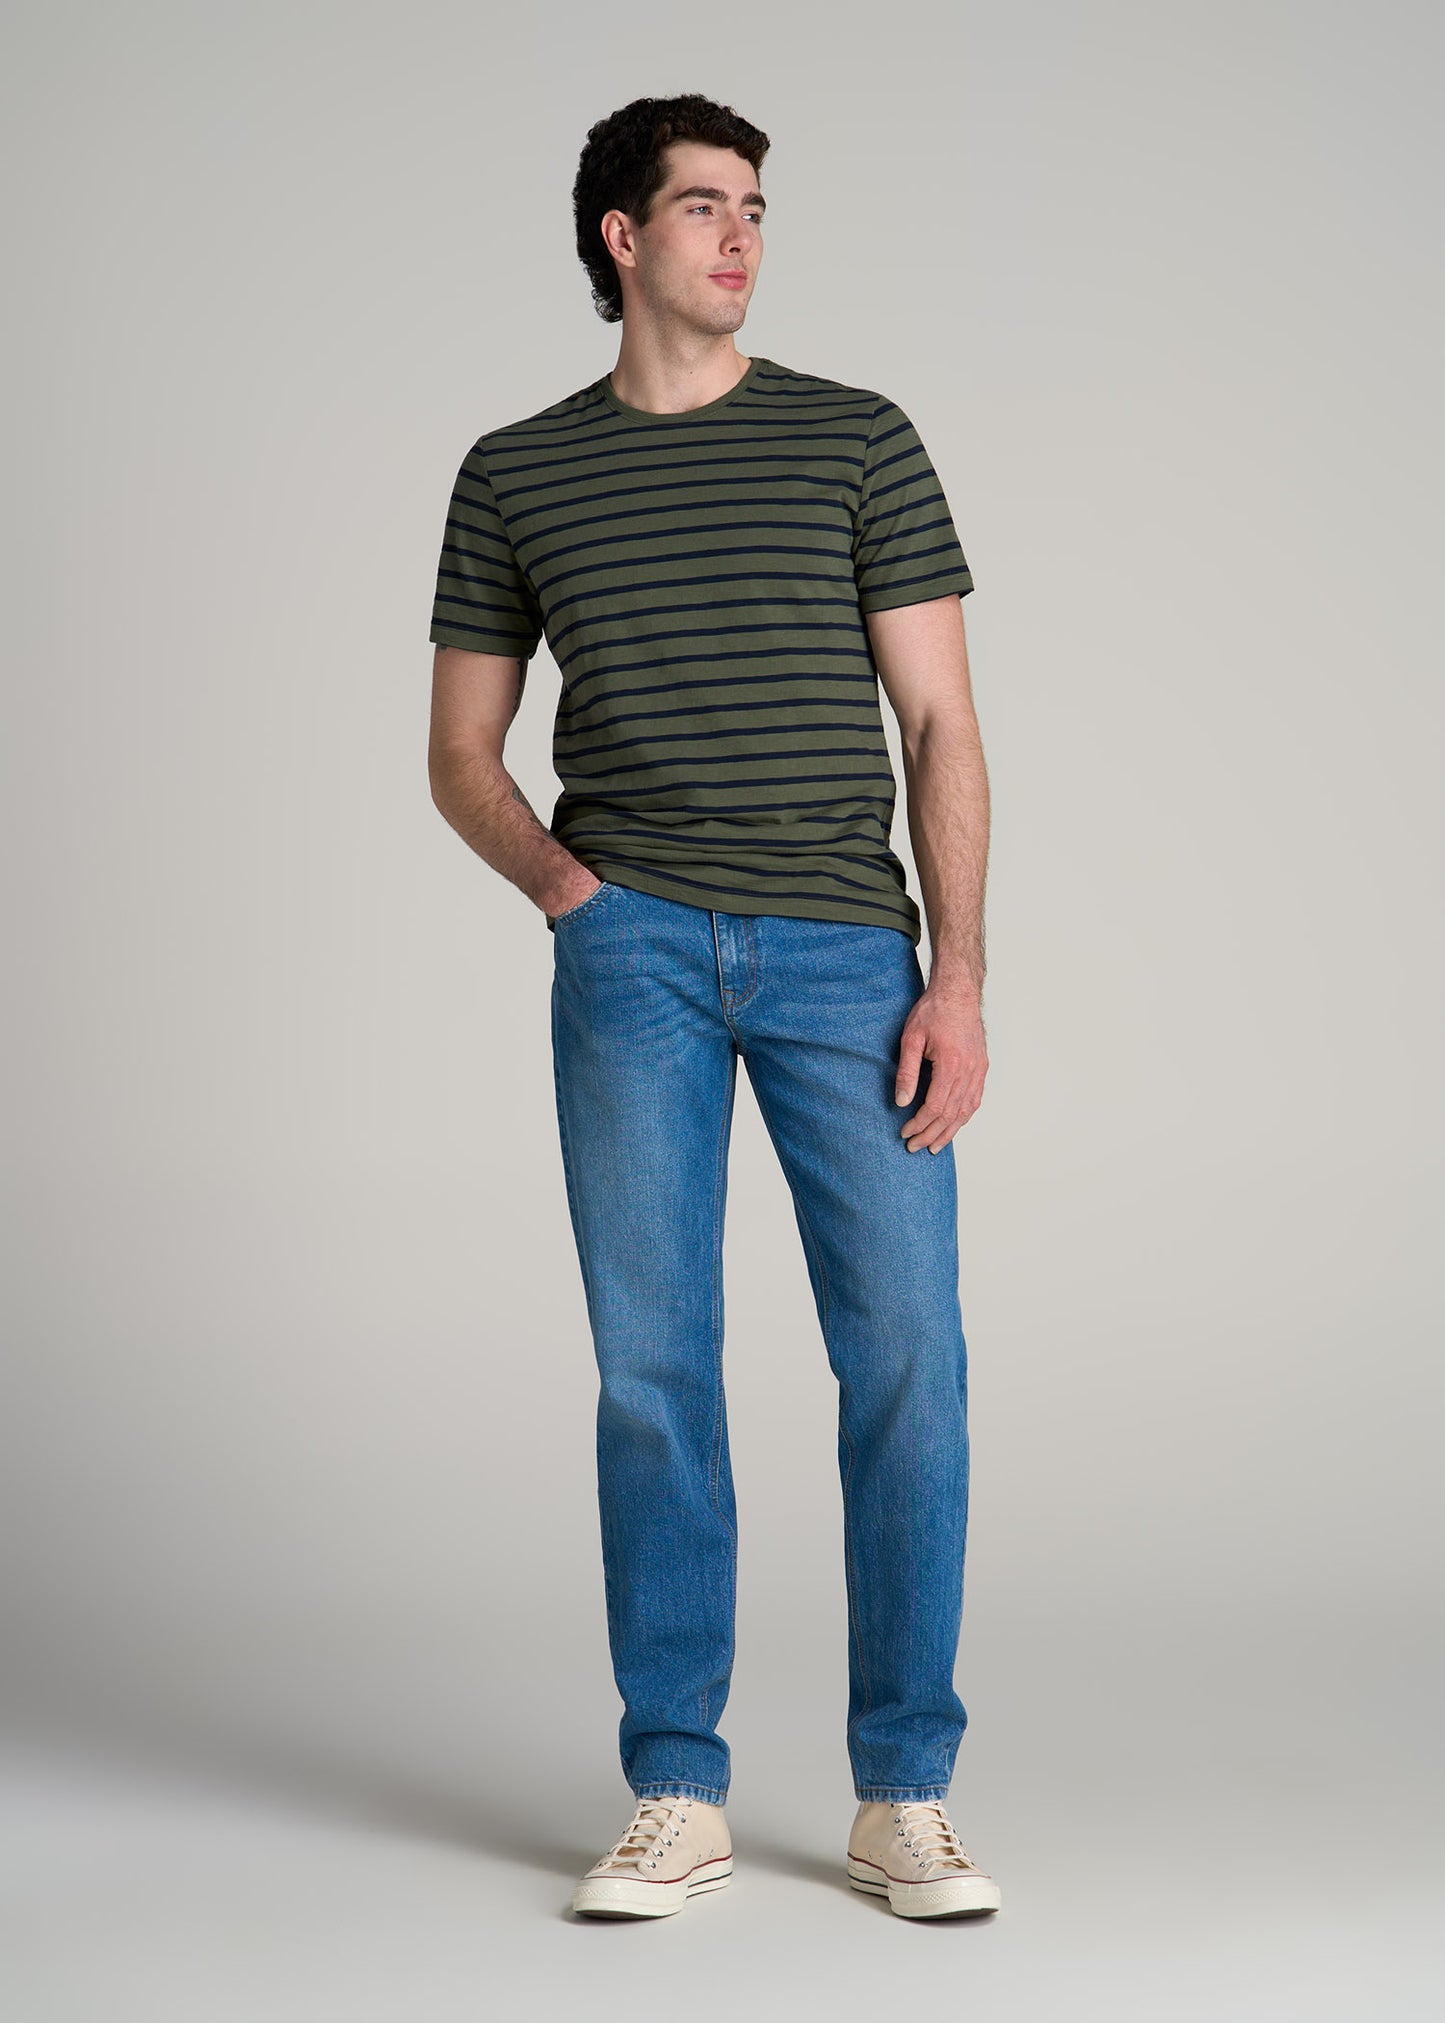 REGULAR-FIT Striped Tee in Dark Green and Navy Stripe - Men's Tall T-shirt